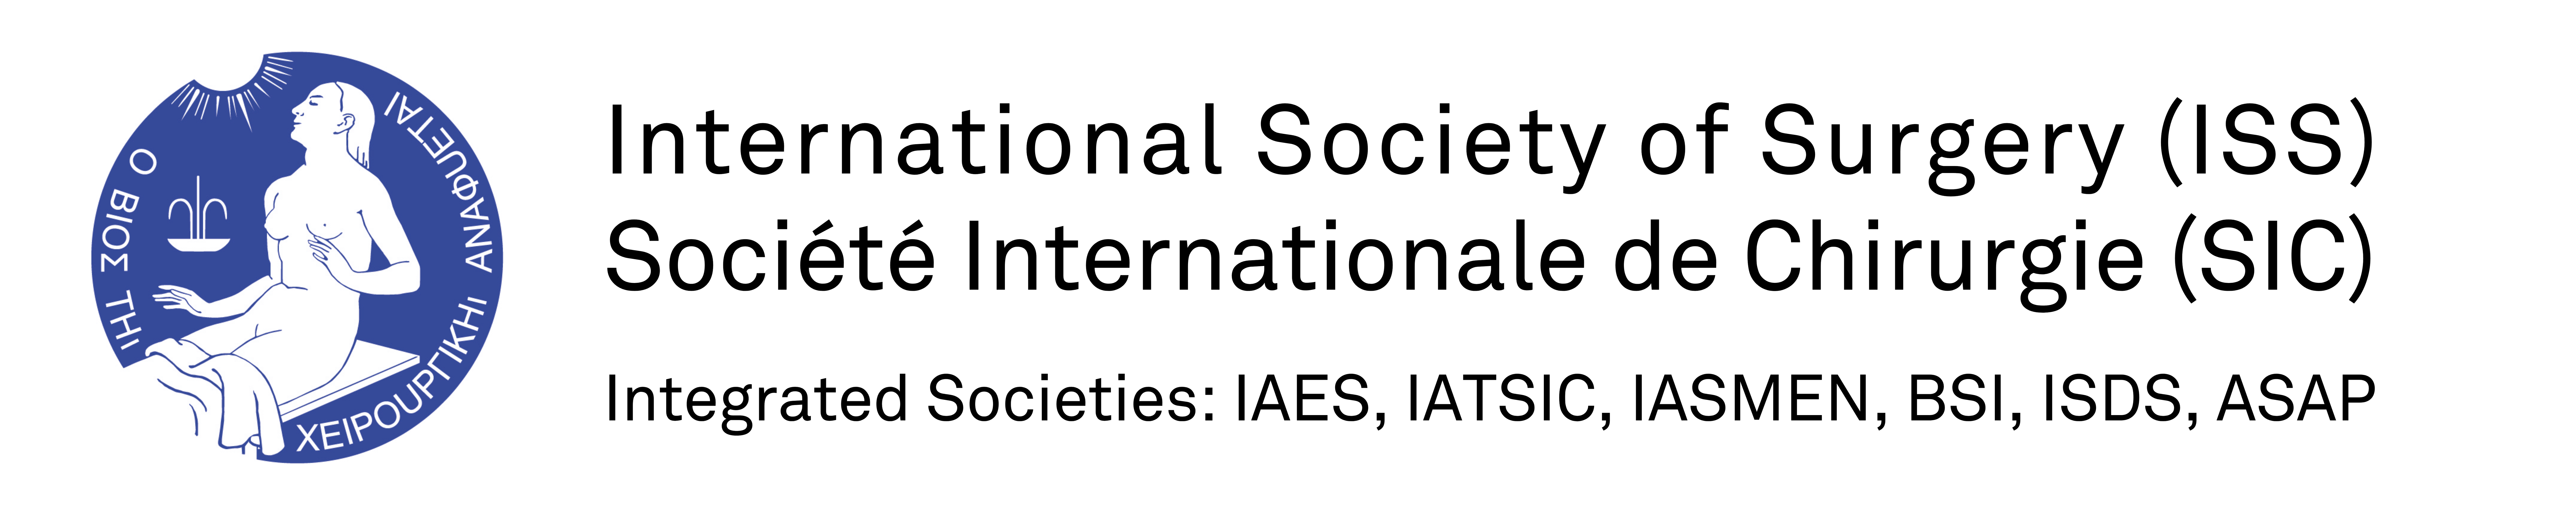 International Society of Surgery - Italy Chapter